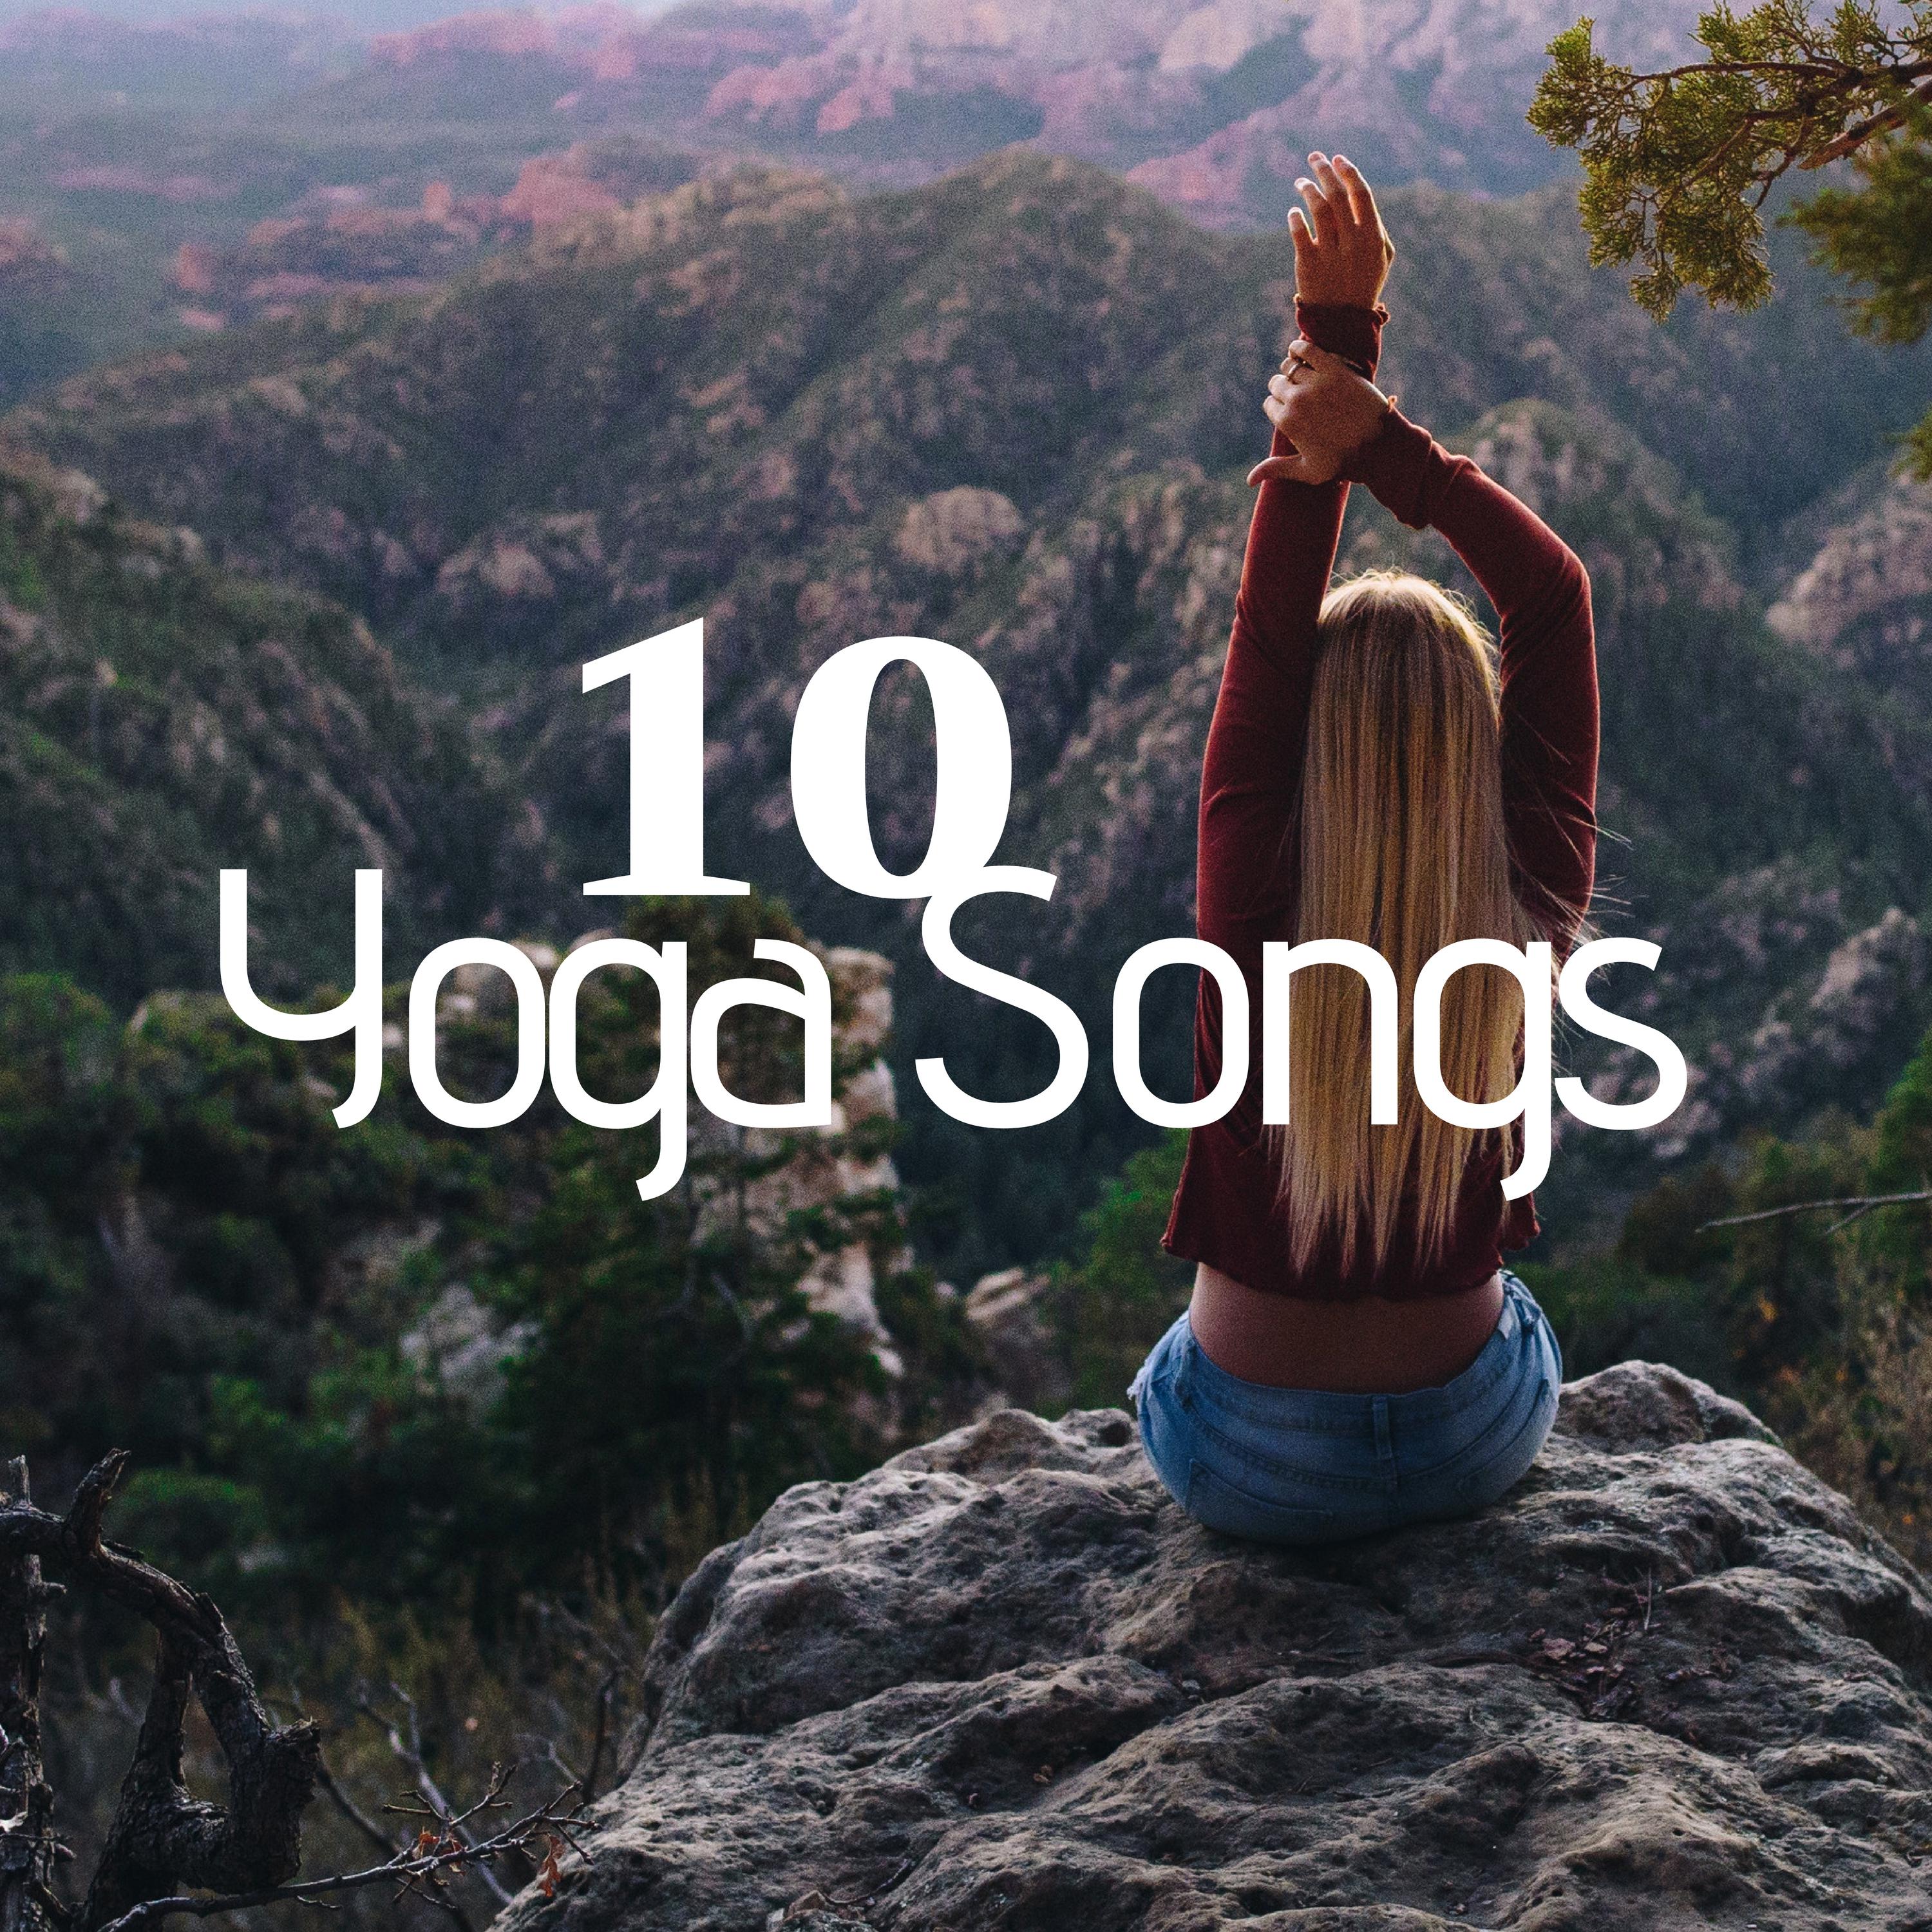 10 Yoga Songs - Meditation Music, Buddhist Music, Nature Sounds, Yoga Music for Yoga Exercises